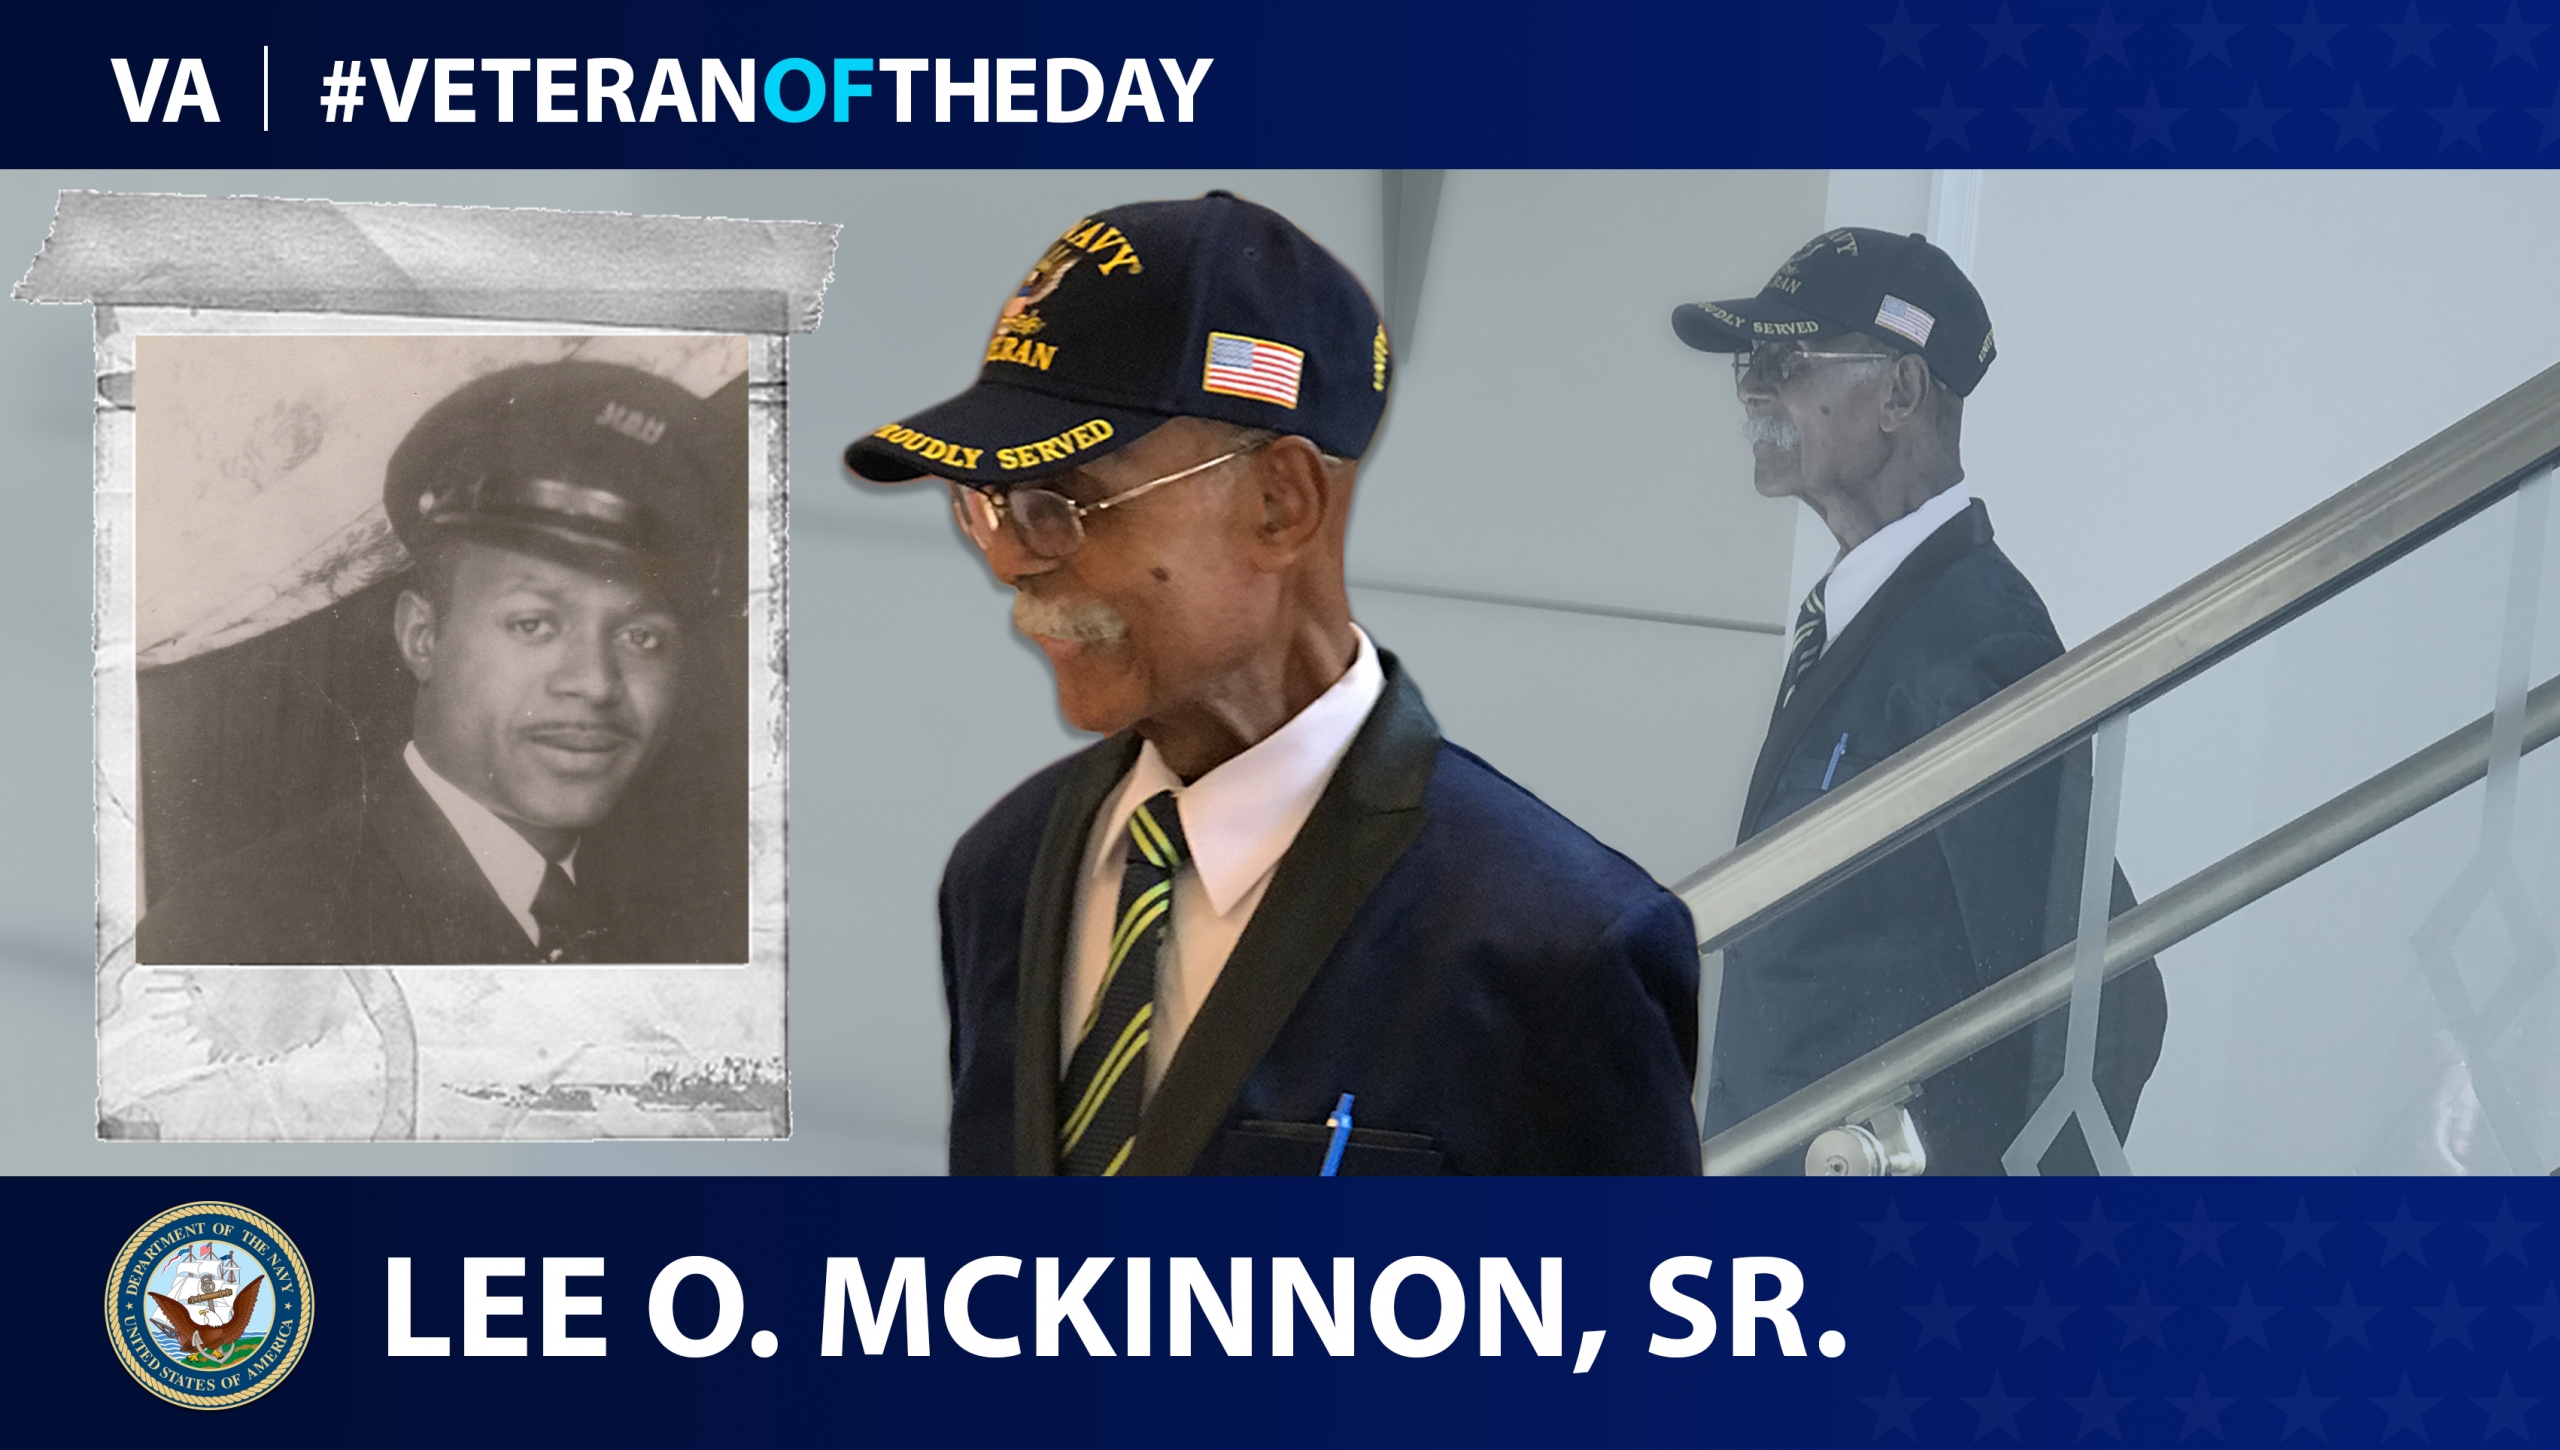 Navy Veteran Lee O. McKinnon Sr. is today's Veteran of the day.